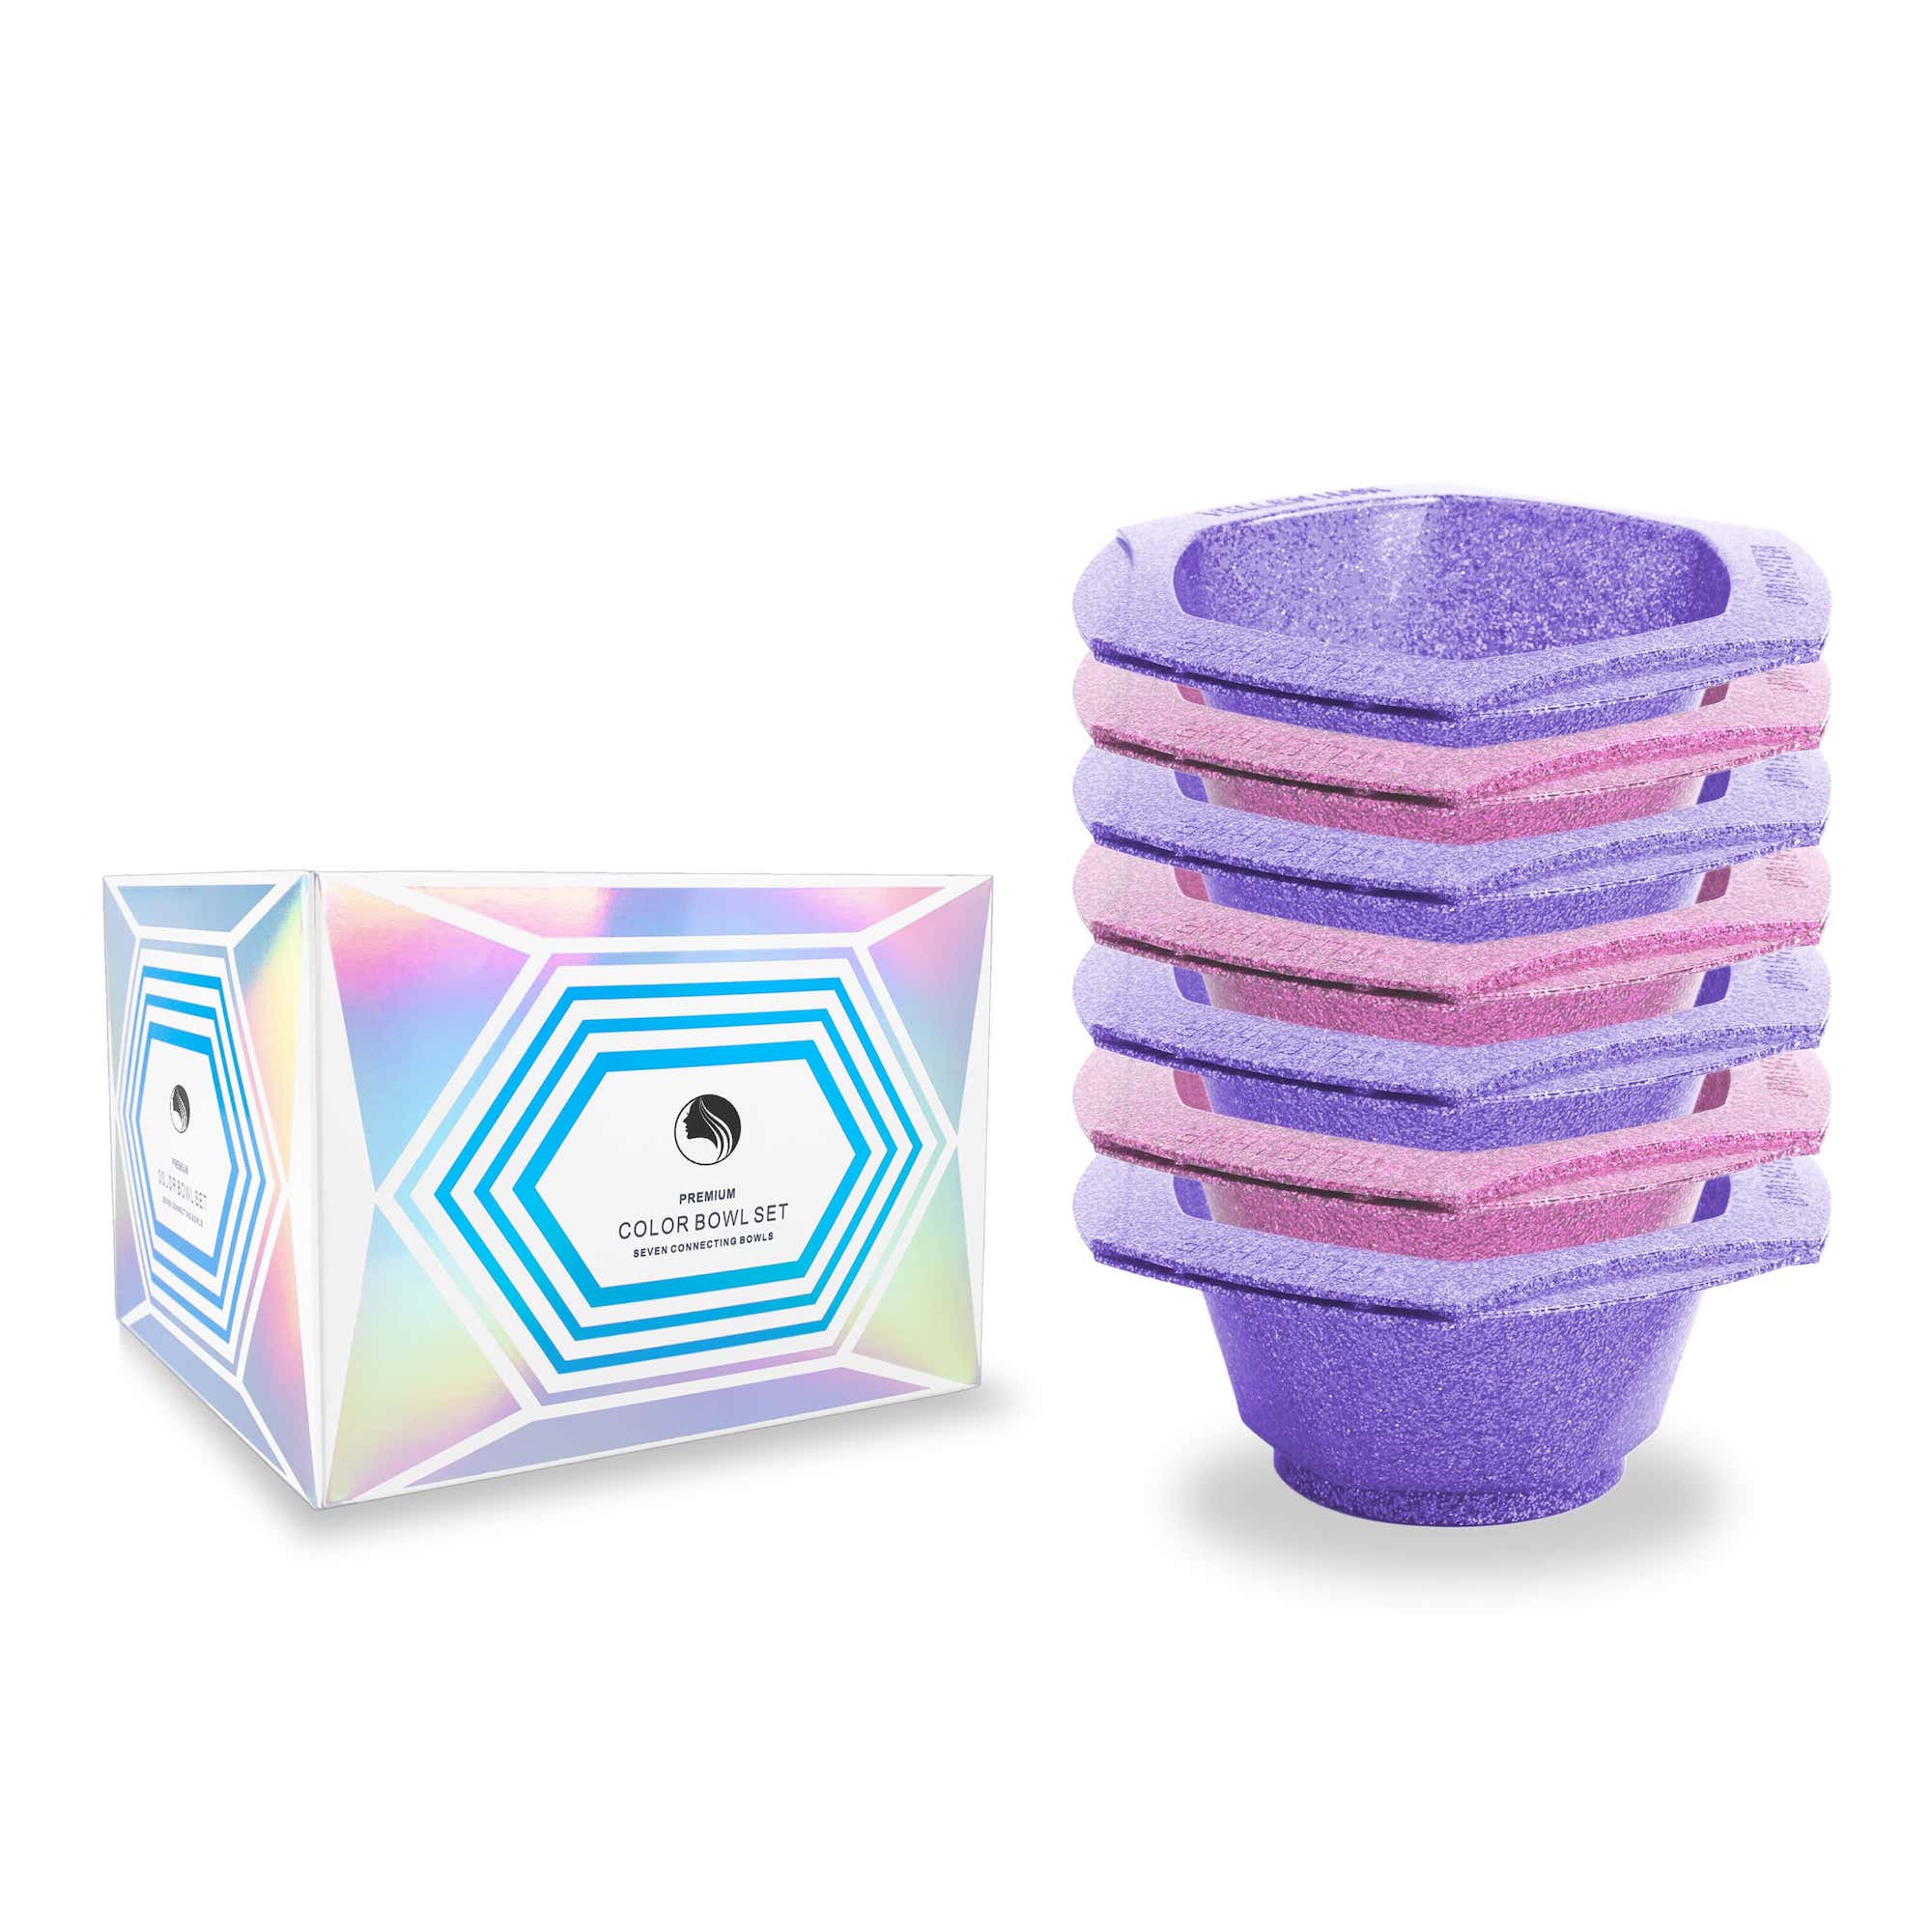 Glam Color Bowl Set - 7 Pack - Purple / Pink